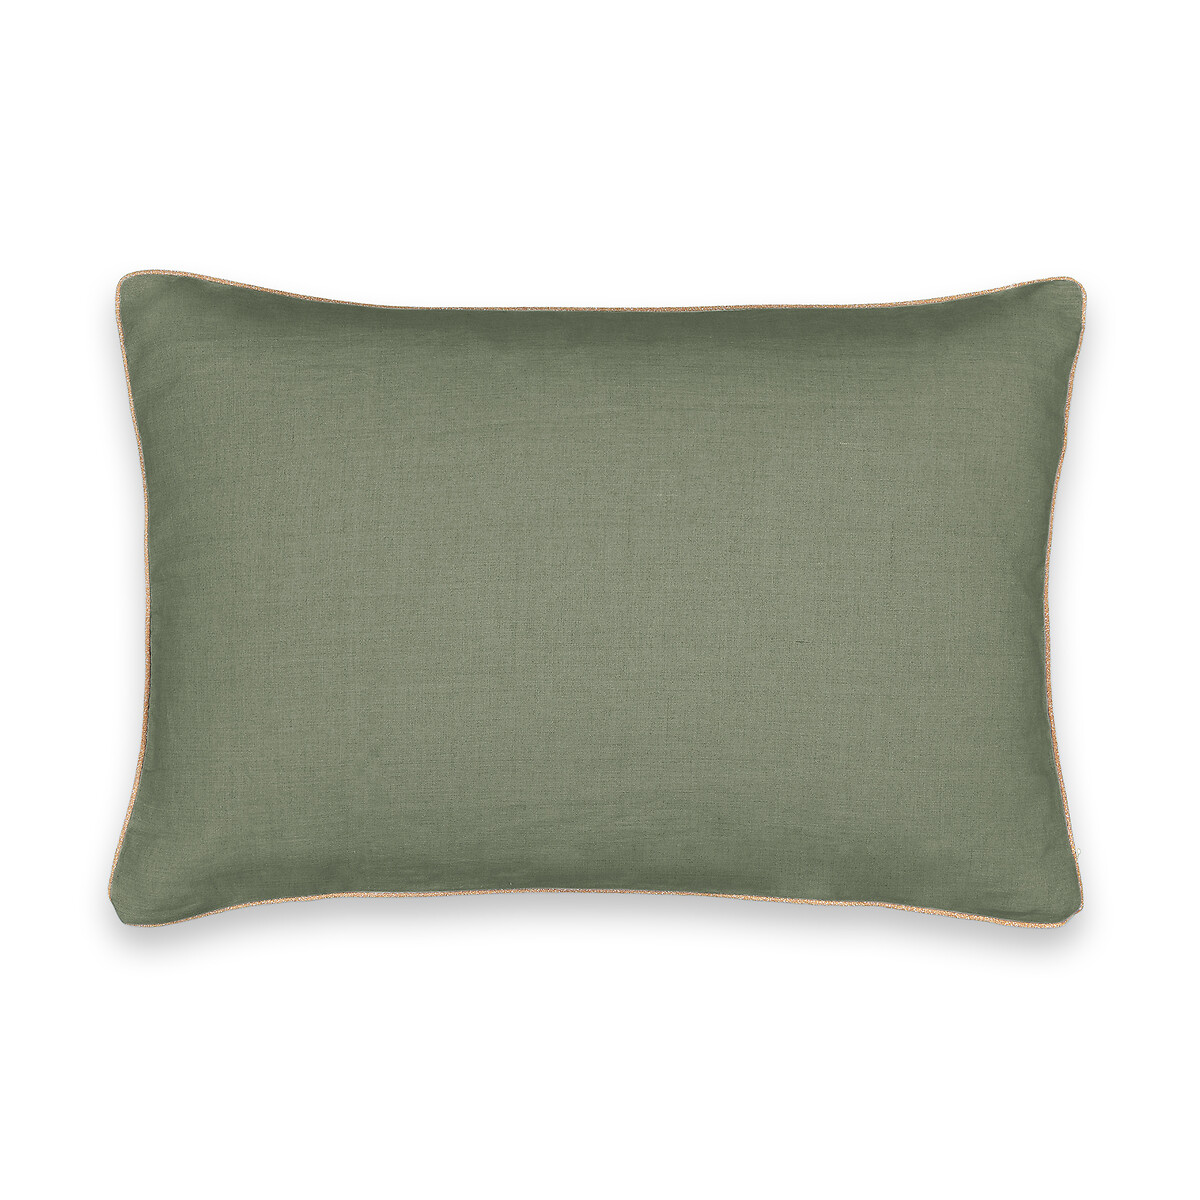 Чехол LaRedoute Для подушки из стираного льна Onega 60 x 40 см зеленый, размер 60 x 40 см